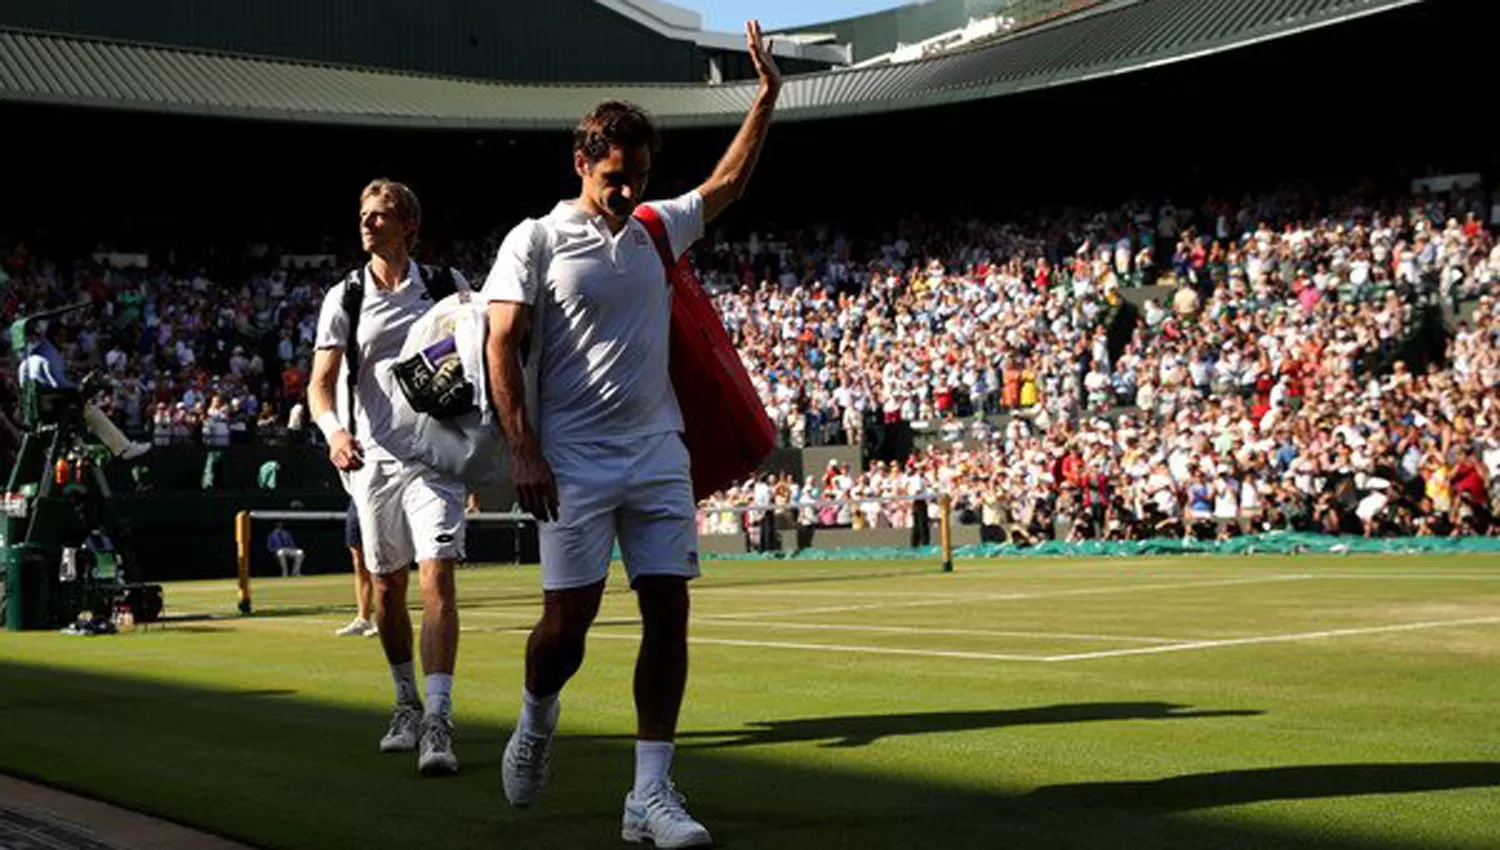 DIJO ADIÓS. Federer se despidió de Wimbledon luego de la derrota con Anderson. (FOTO TOMADA DE TWITTER)